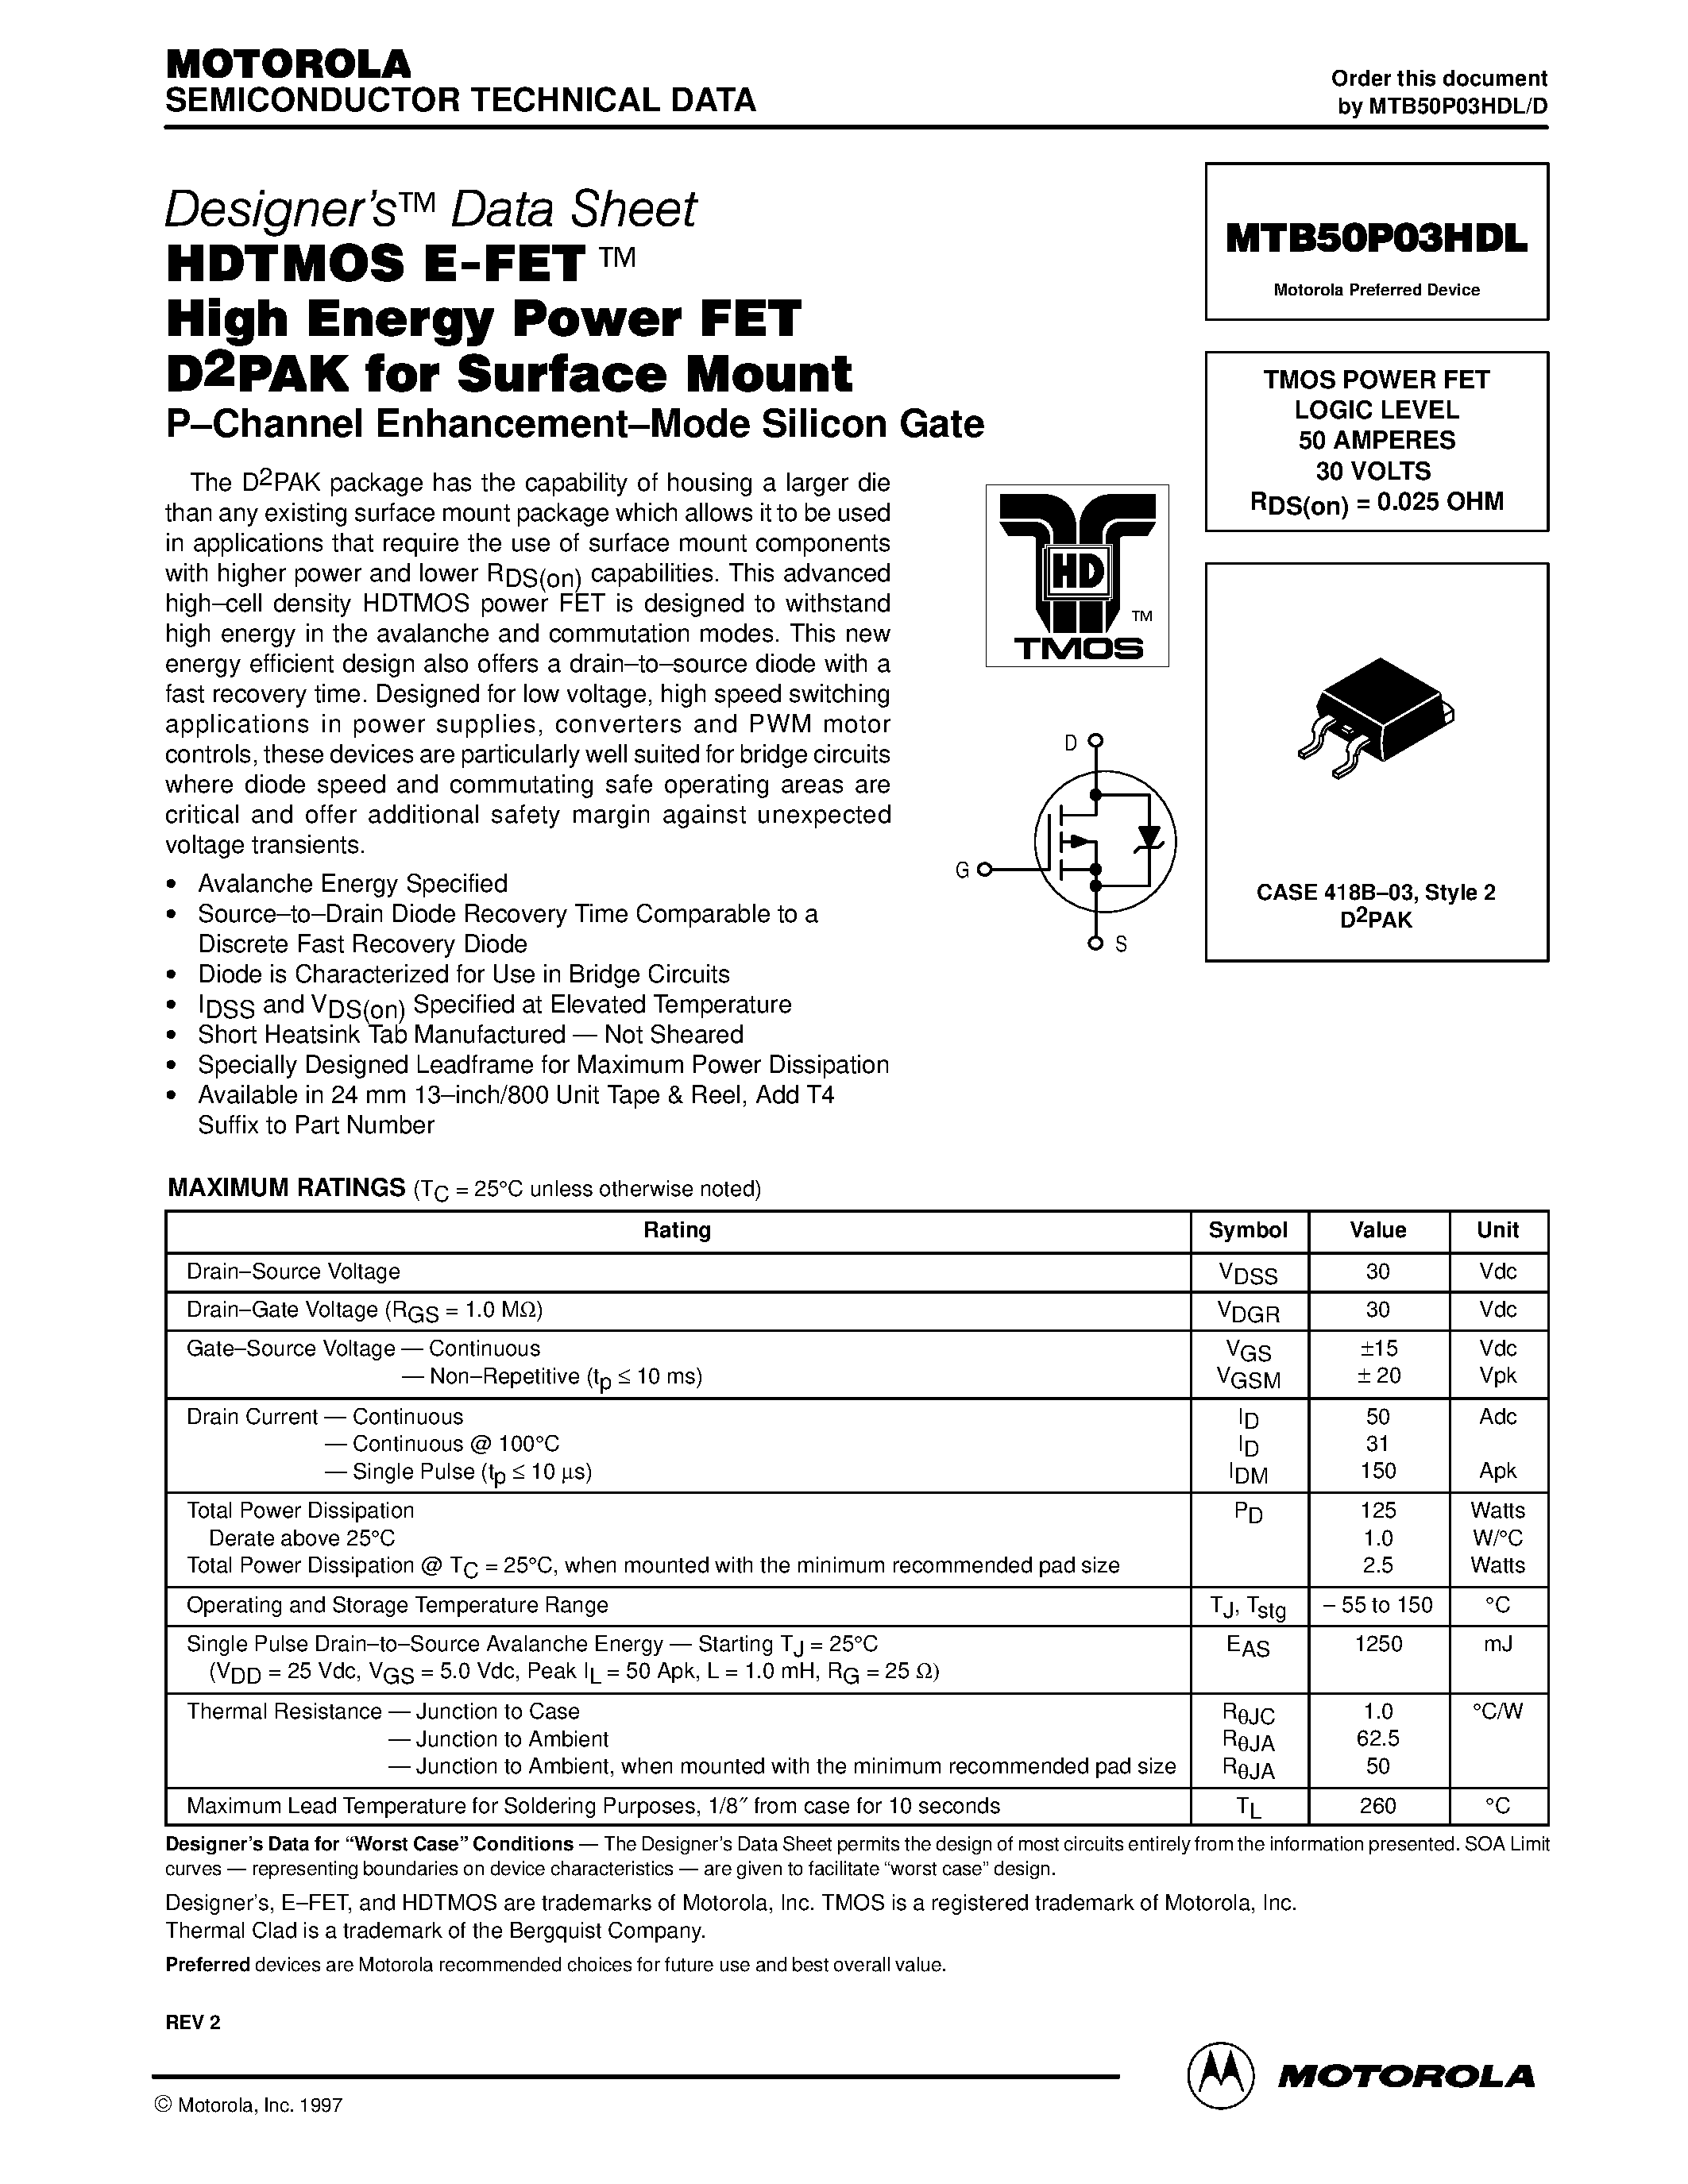 Datasheet MTB50P03HDL - TMOS POWER FET LOGIC LEVEL 50 AMPERES 30 VOLTS page 1